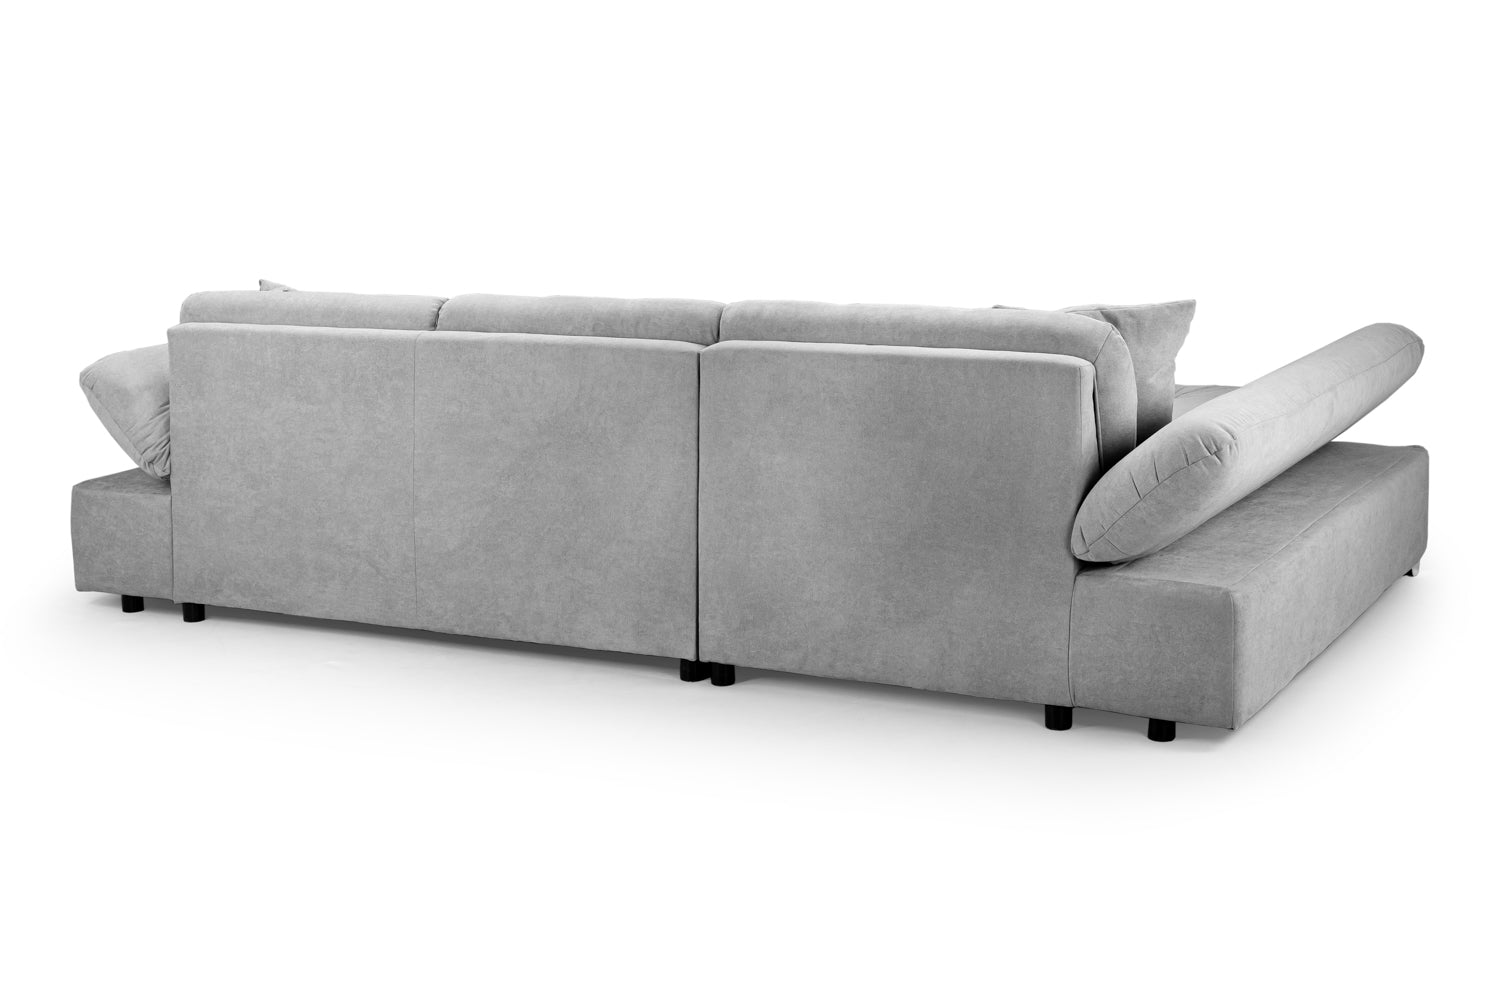 Malvi Sofa Bed Grey Left Hand Facing Corner